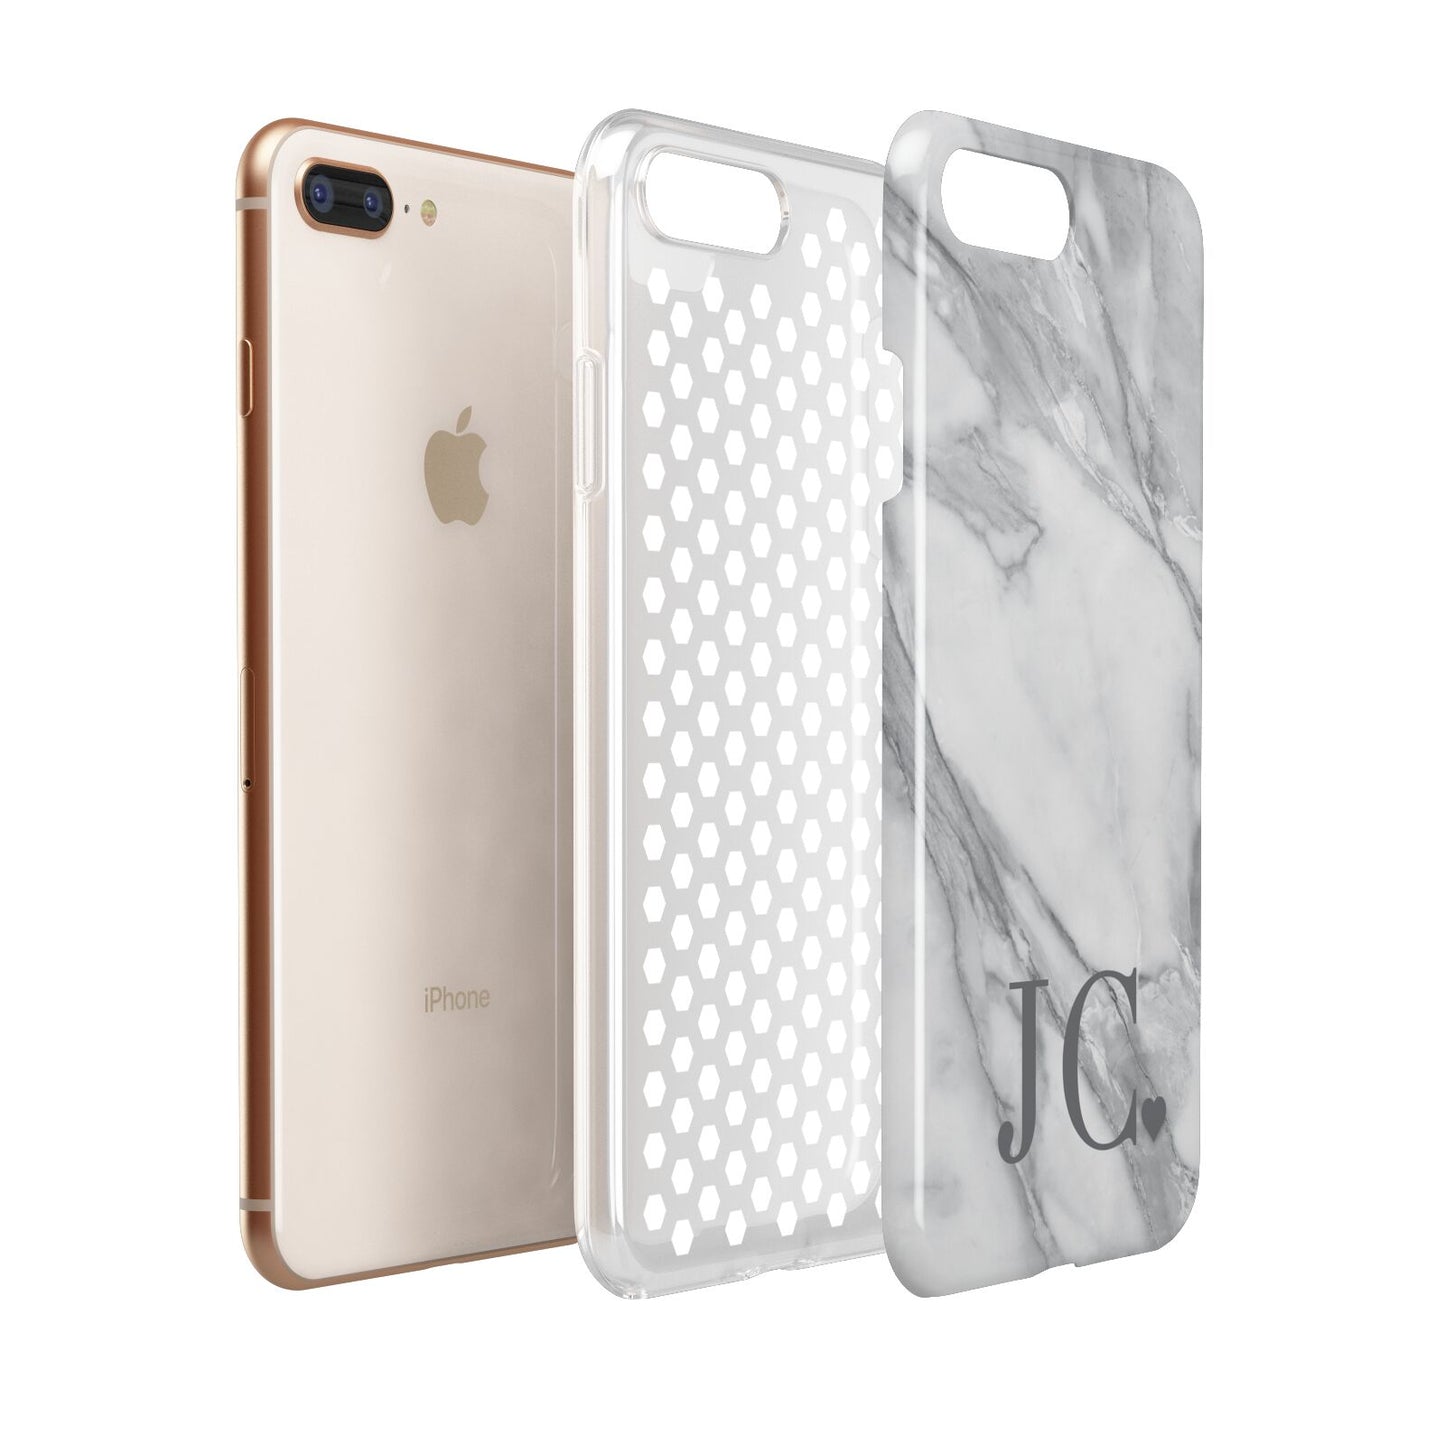 Initials Love Heart Apple iPhone 7 8 Plus 3D Tough Case Expanded View